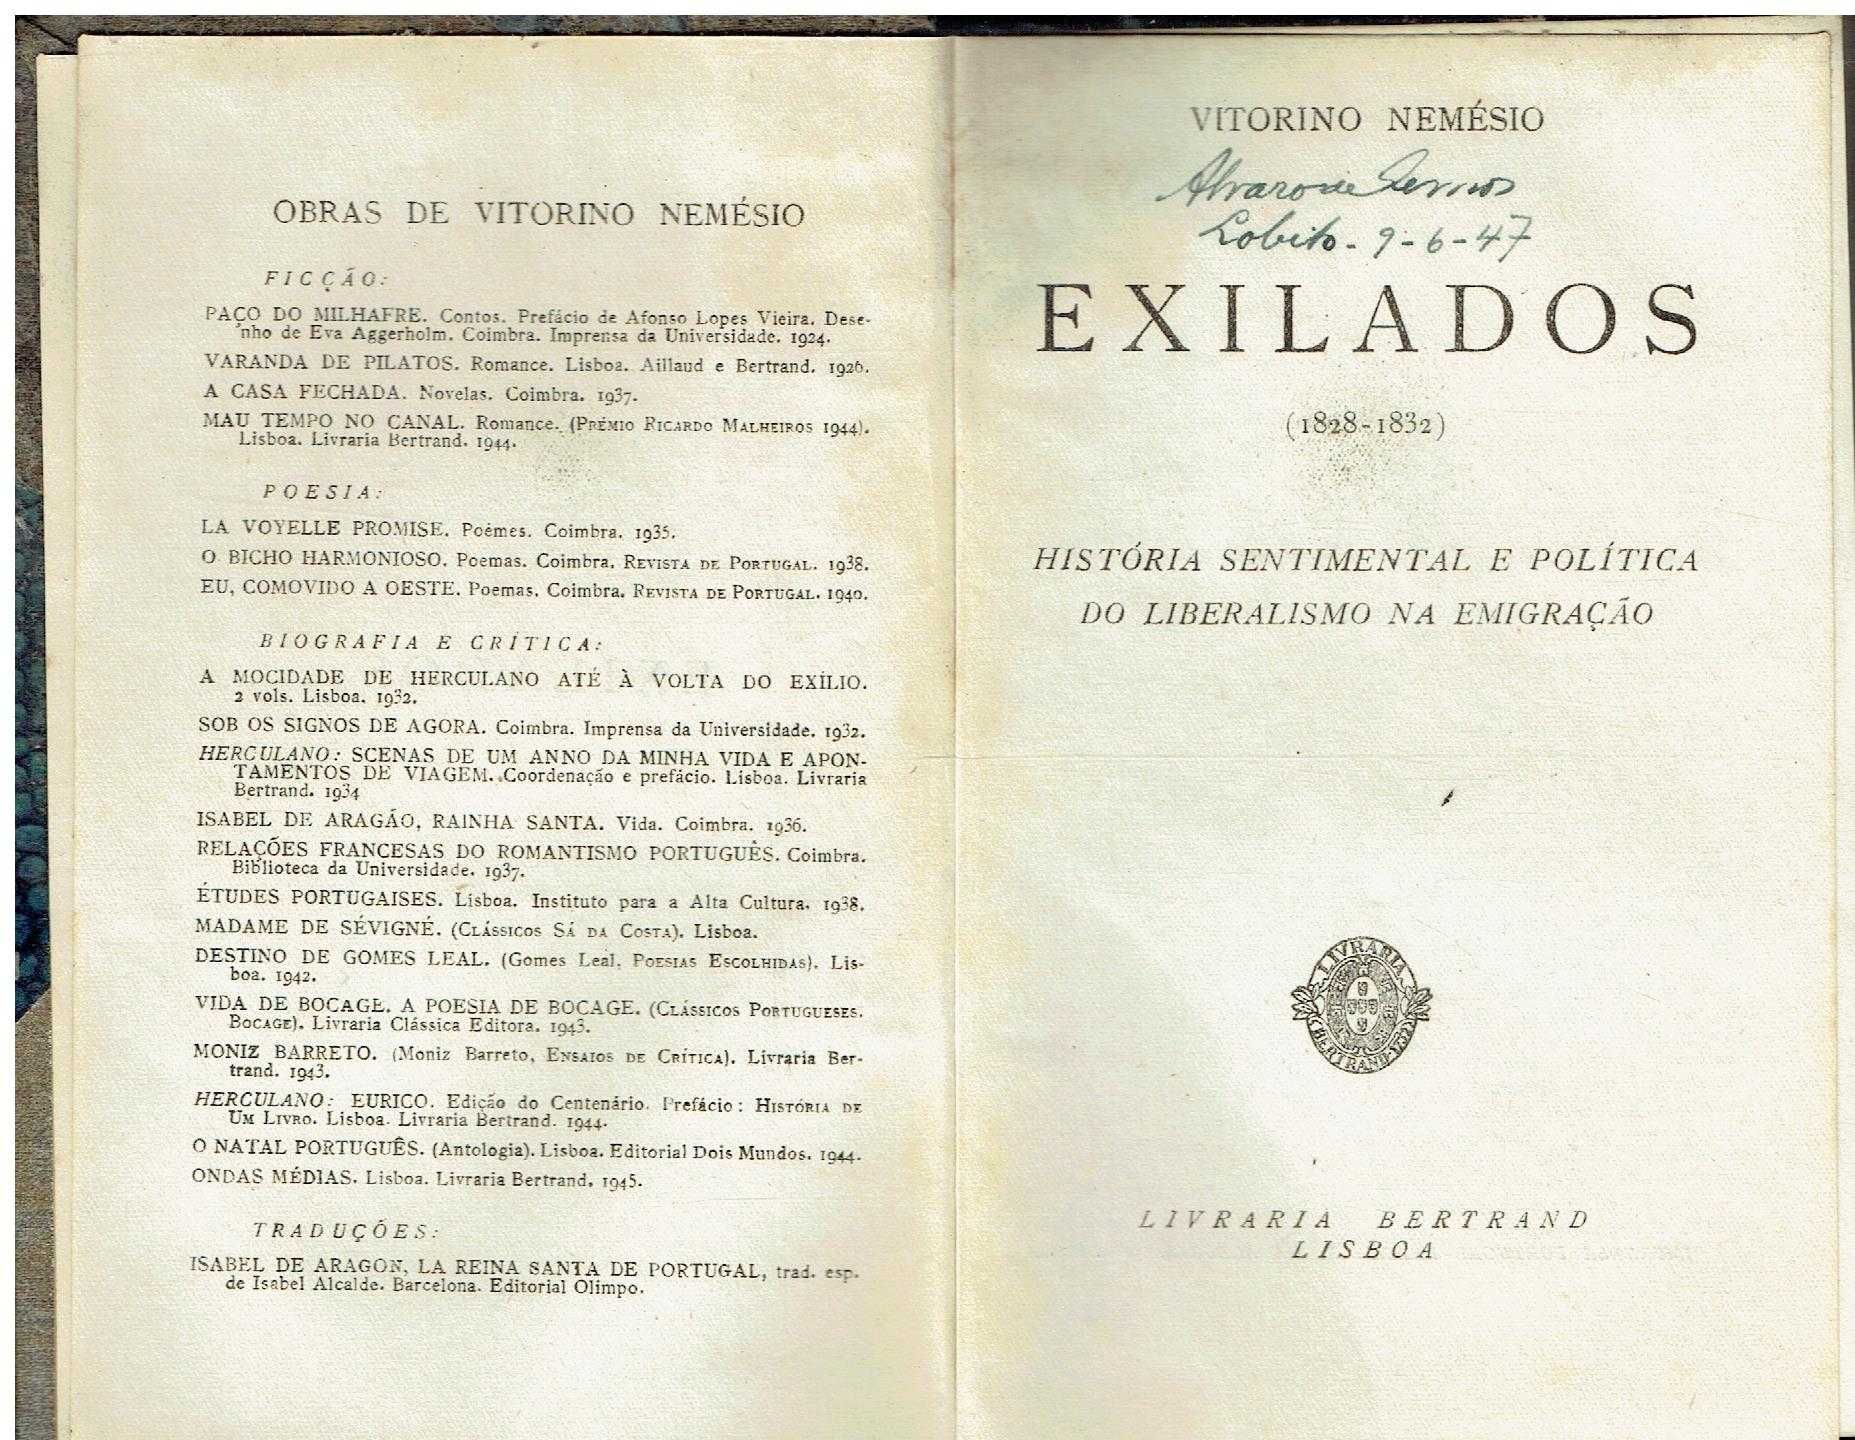 7397
	
Exilados (1828/1832) 
de Vitorino Nemésio